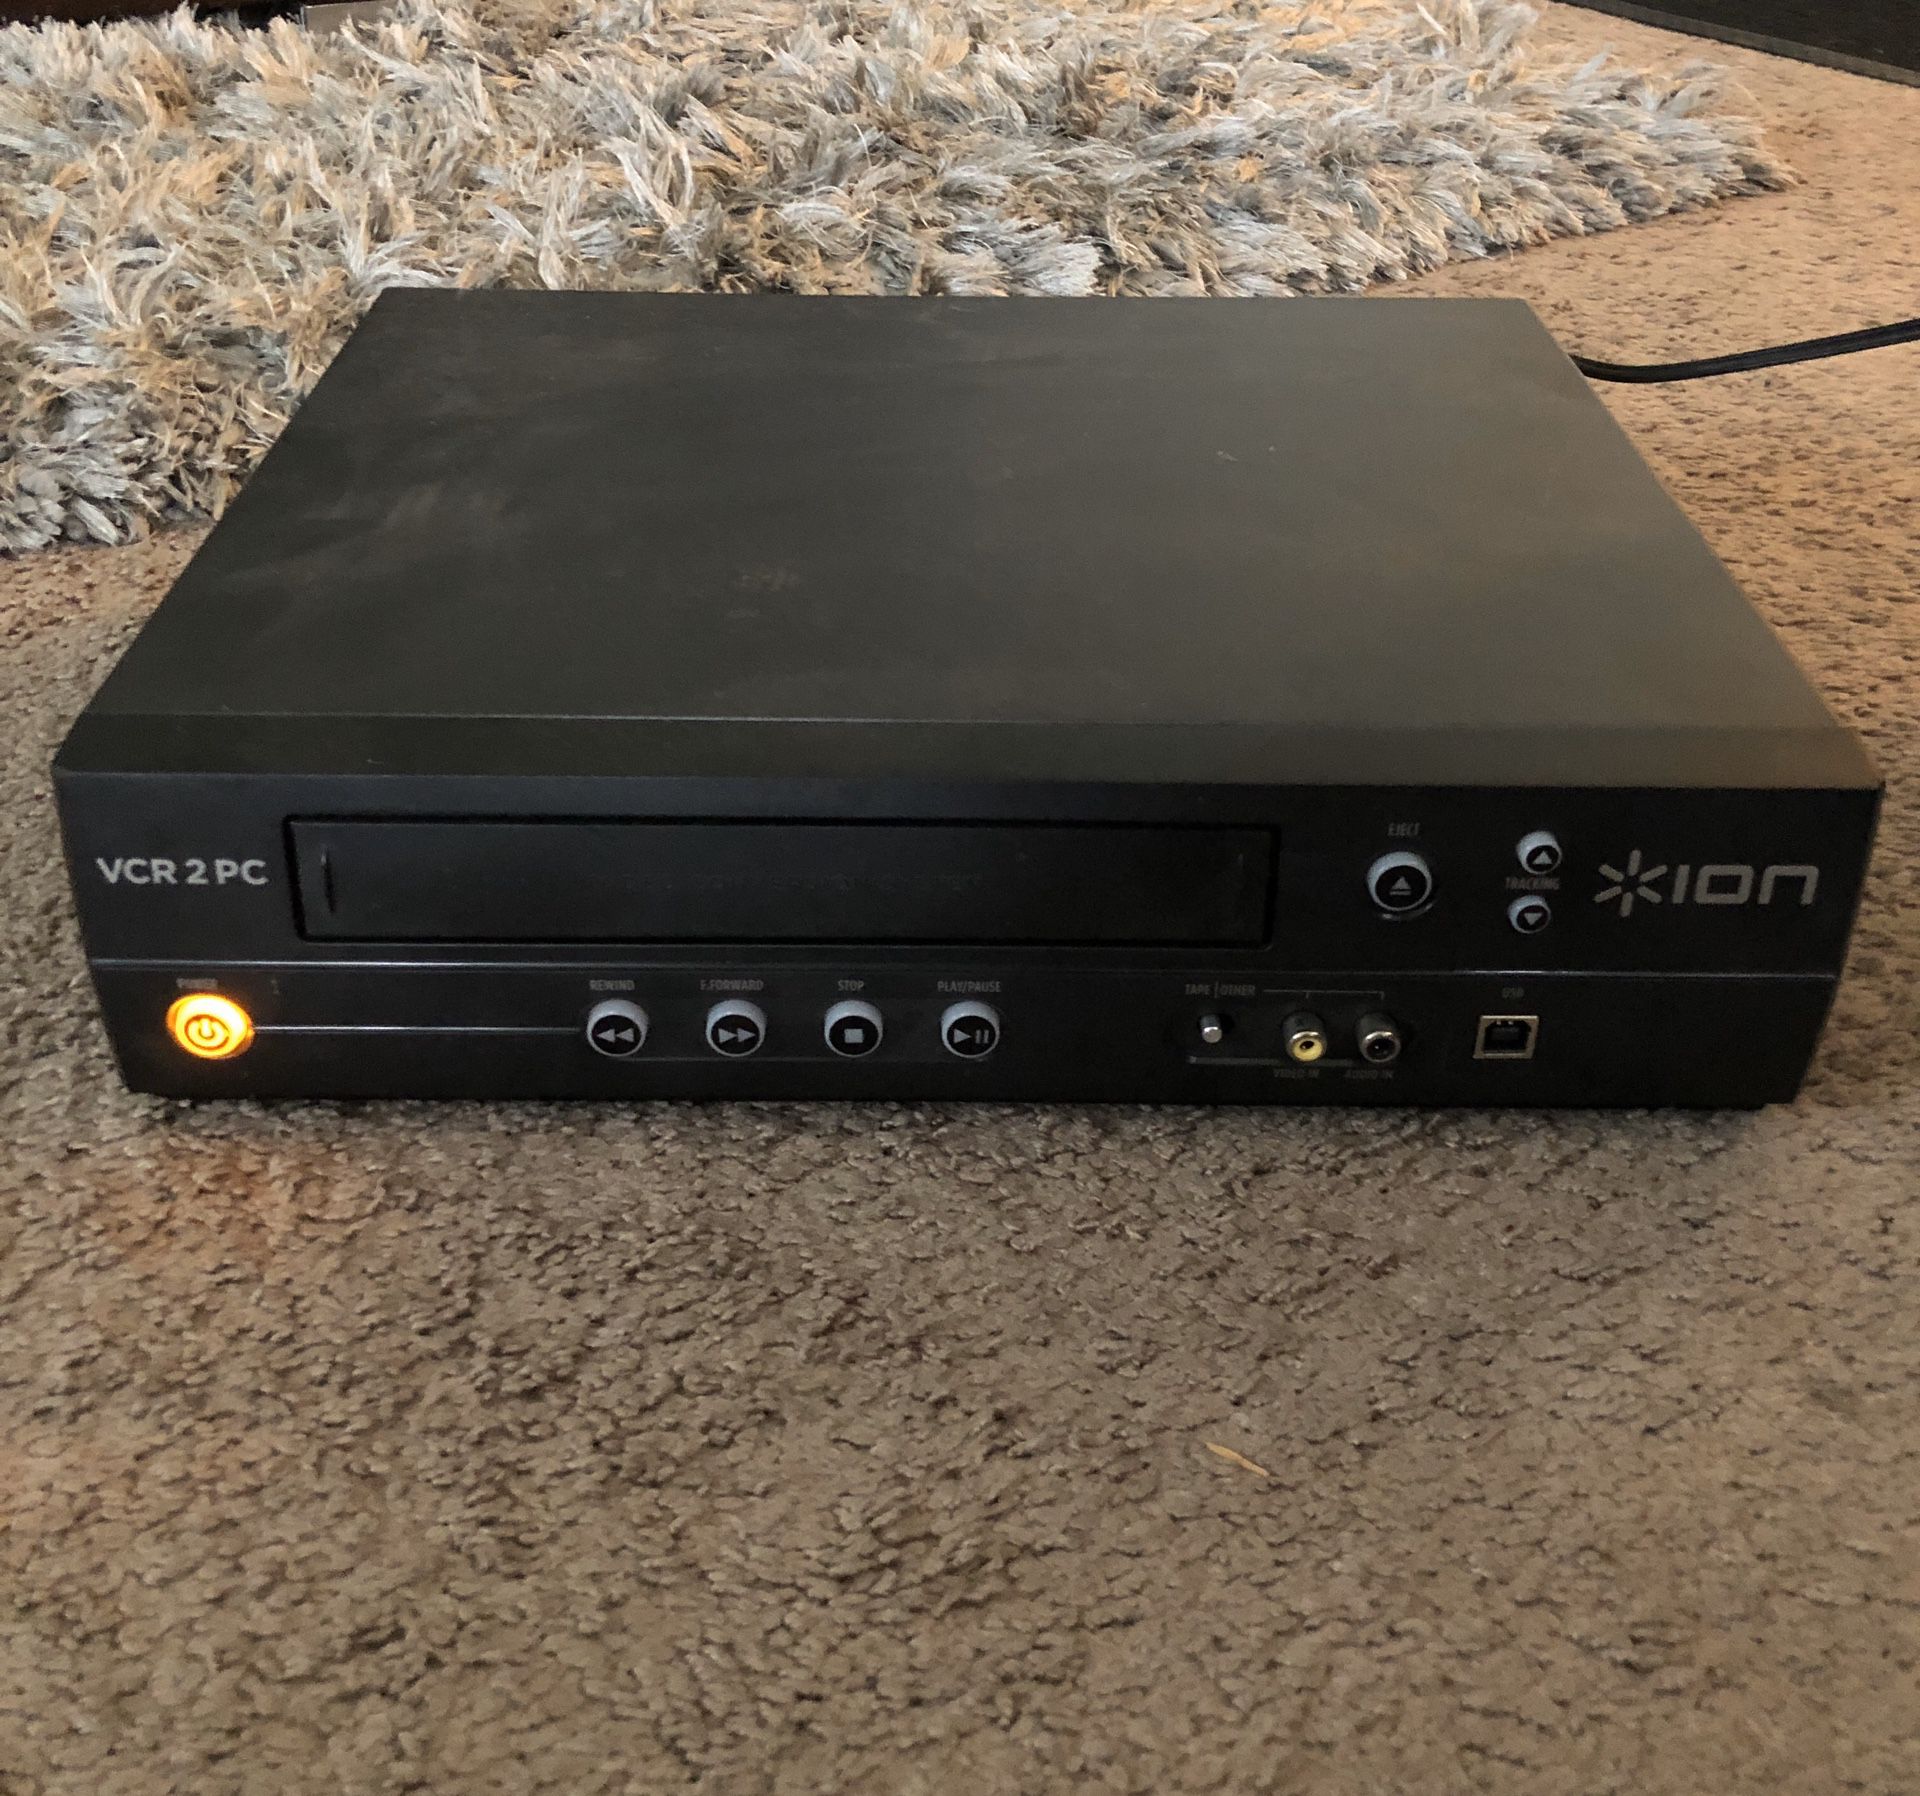 NIB ION VCR 2 PC Player Video Conversion System Convert VHS To Computer USB 2.0